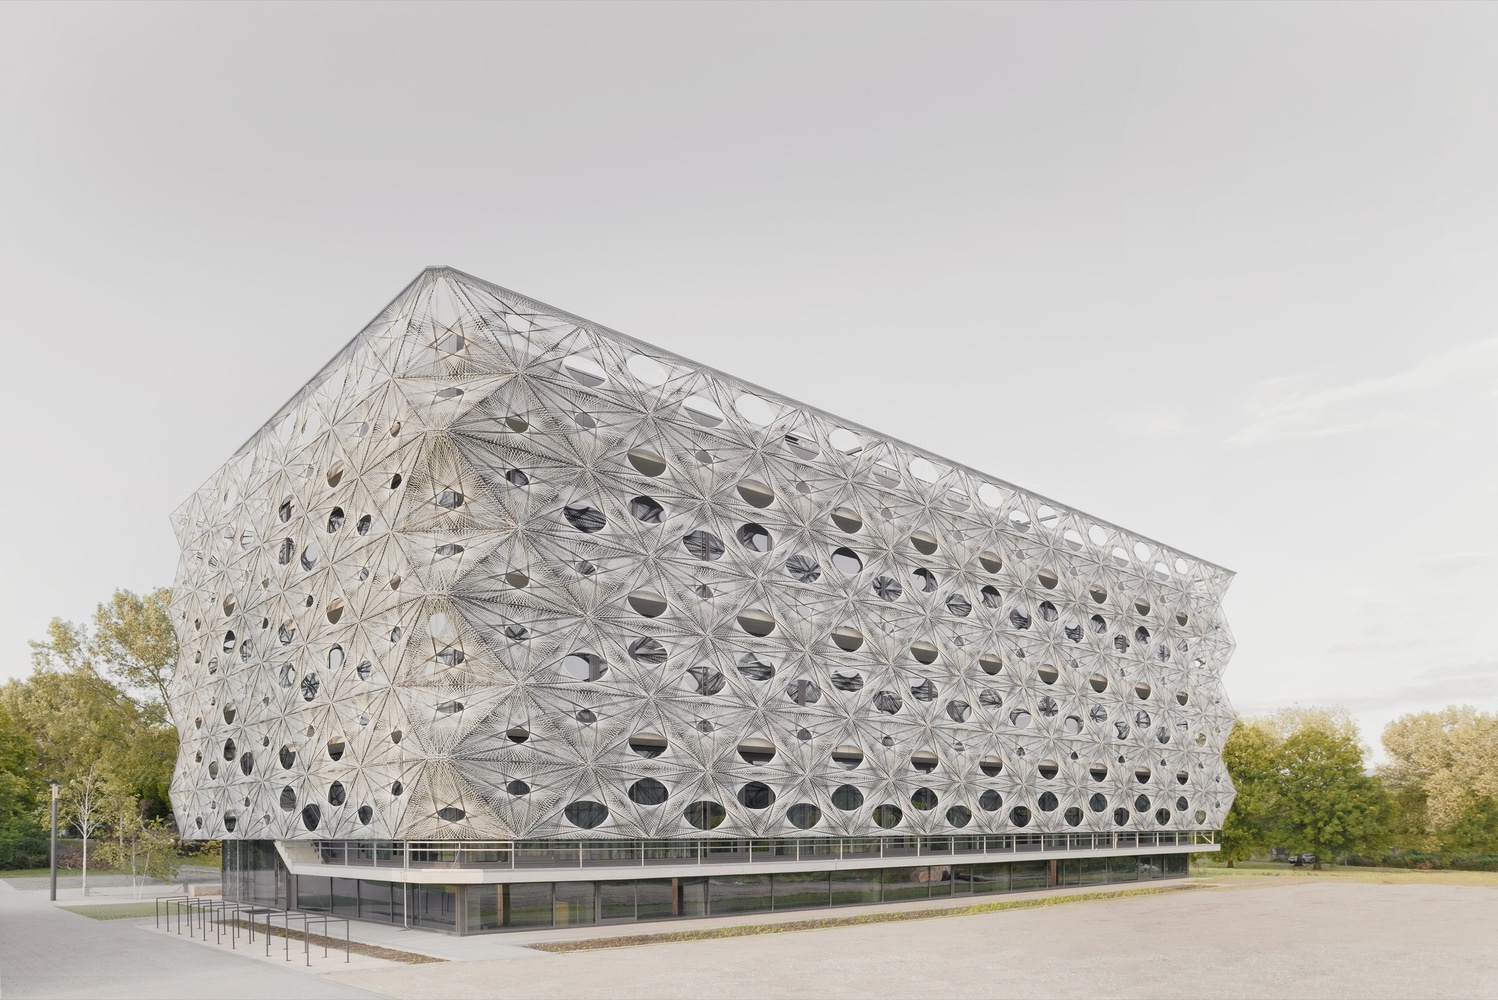 Фасад здания Университета Ройтлингена создан роботом